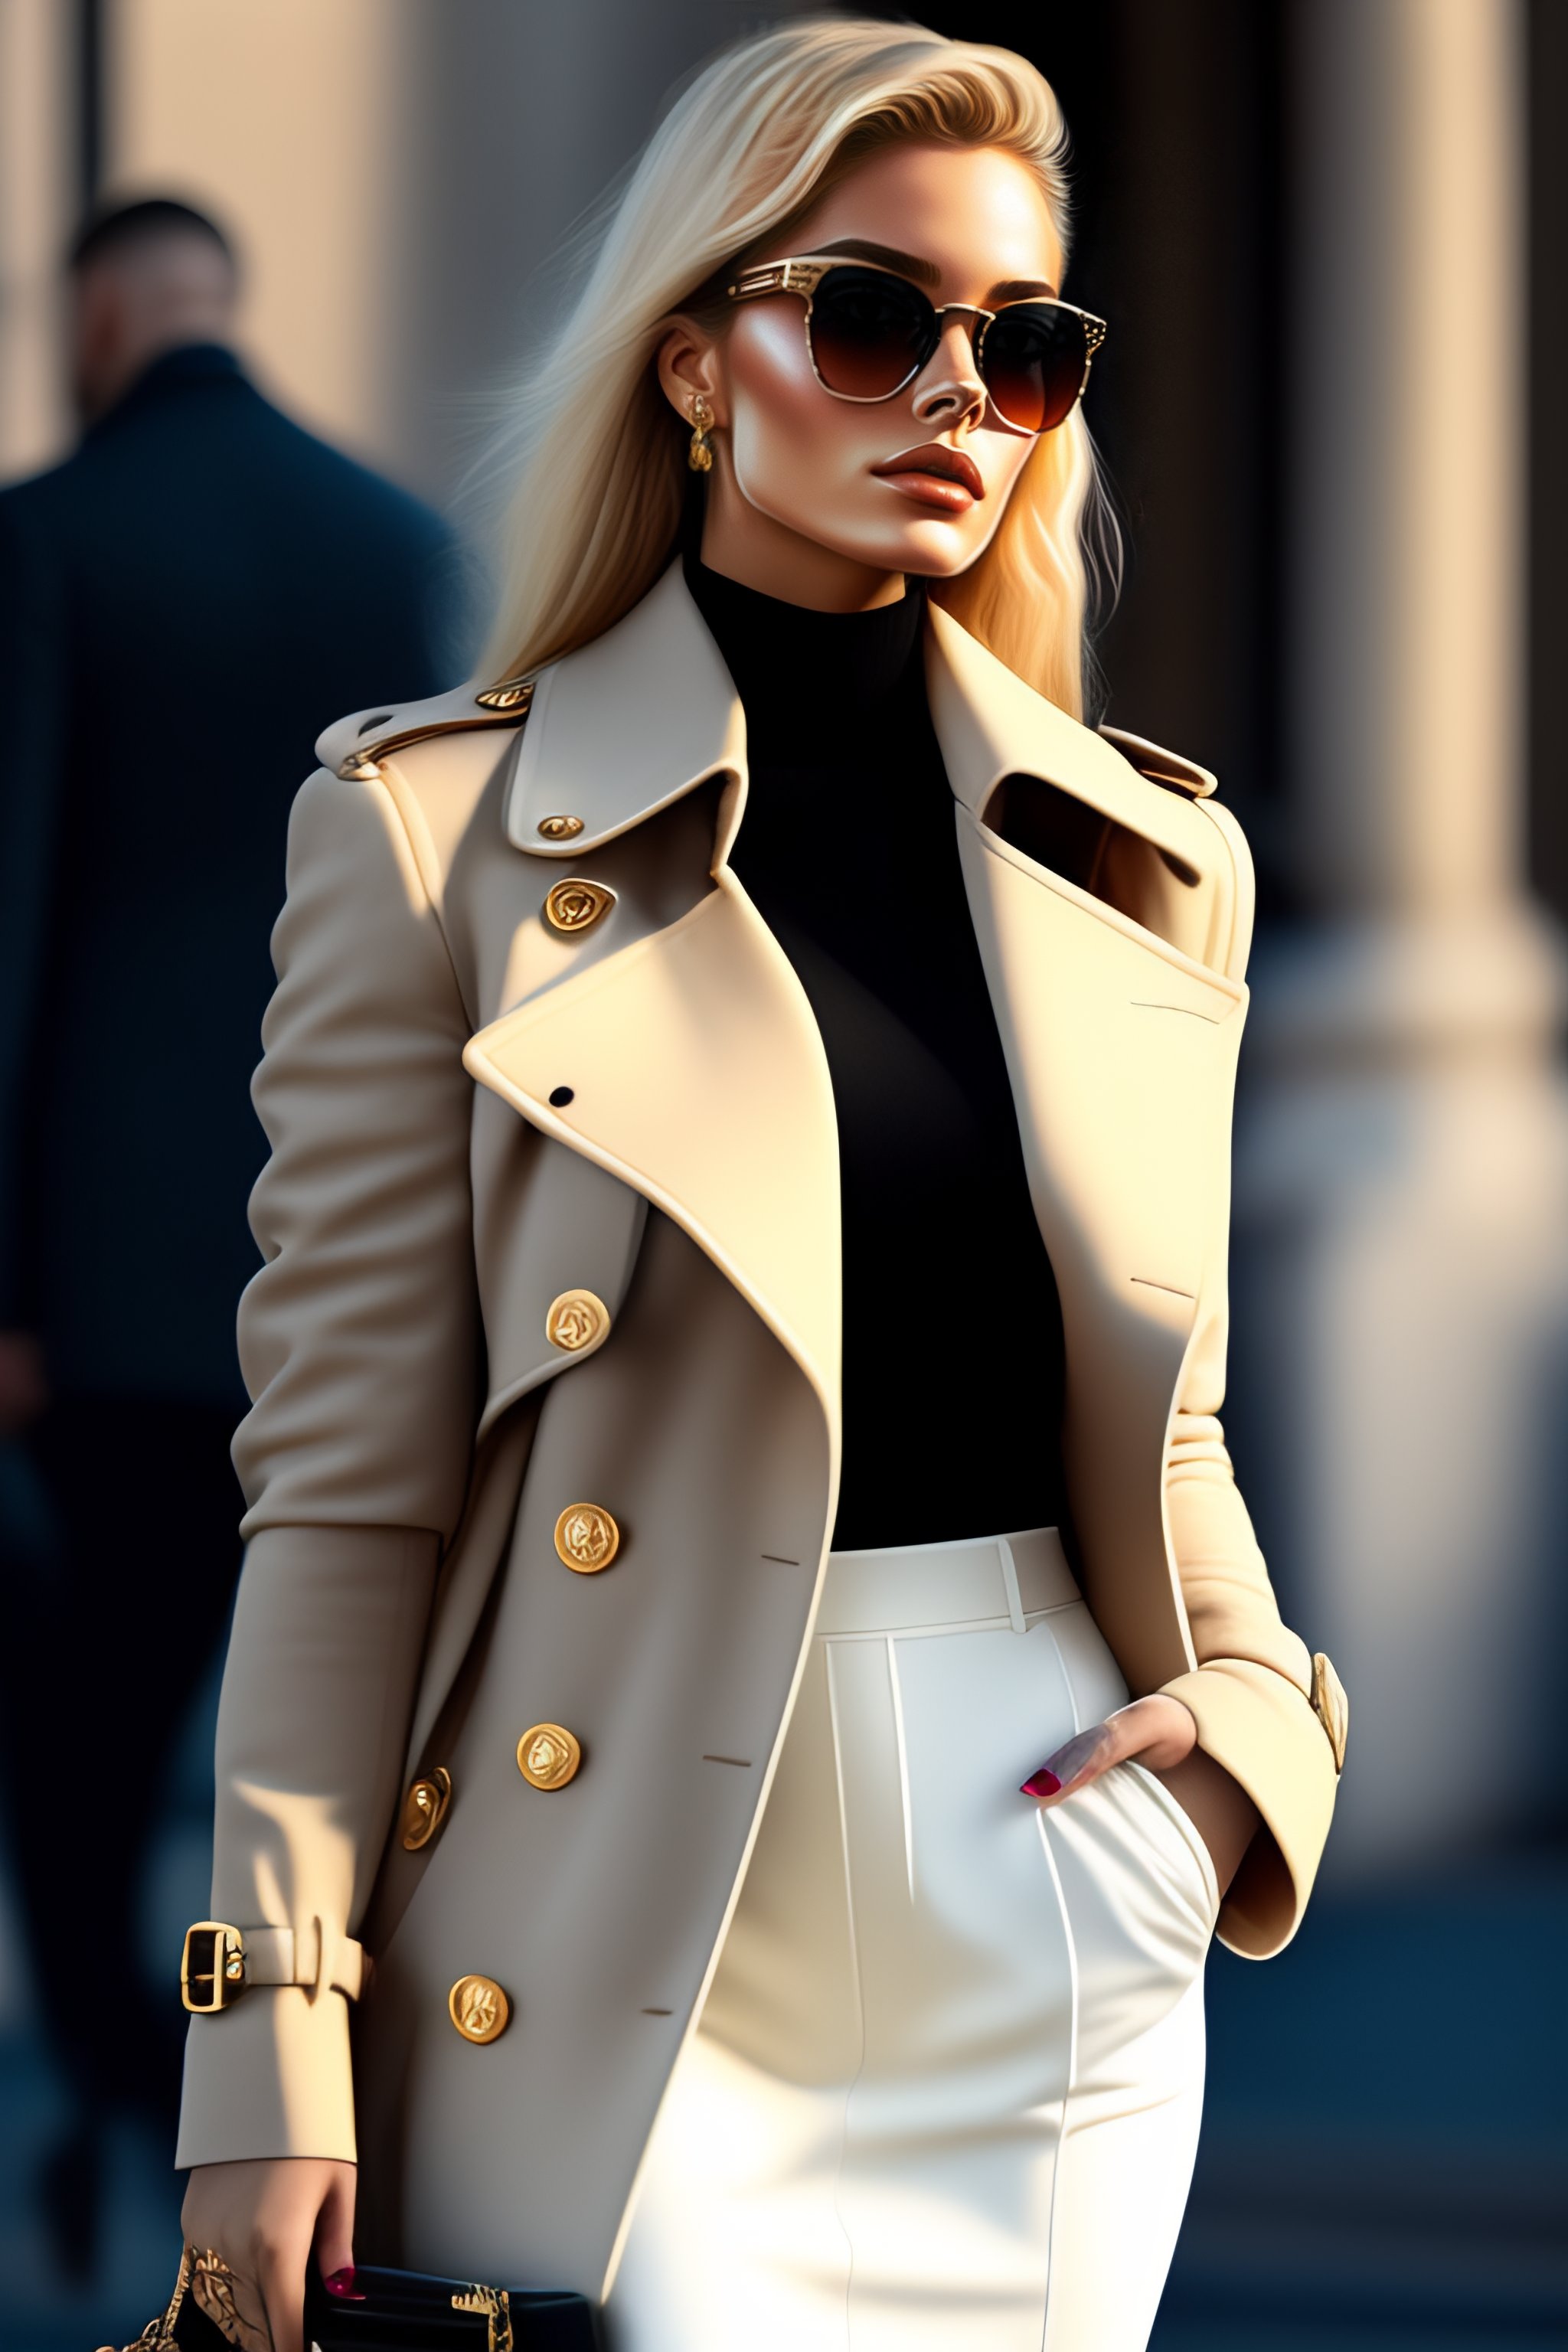 Louis Vuitton trench coat for women